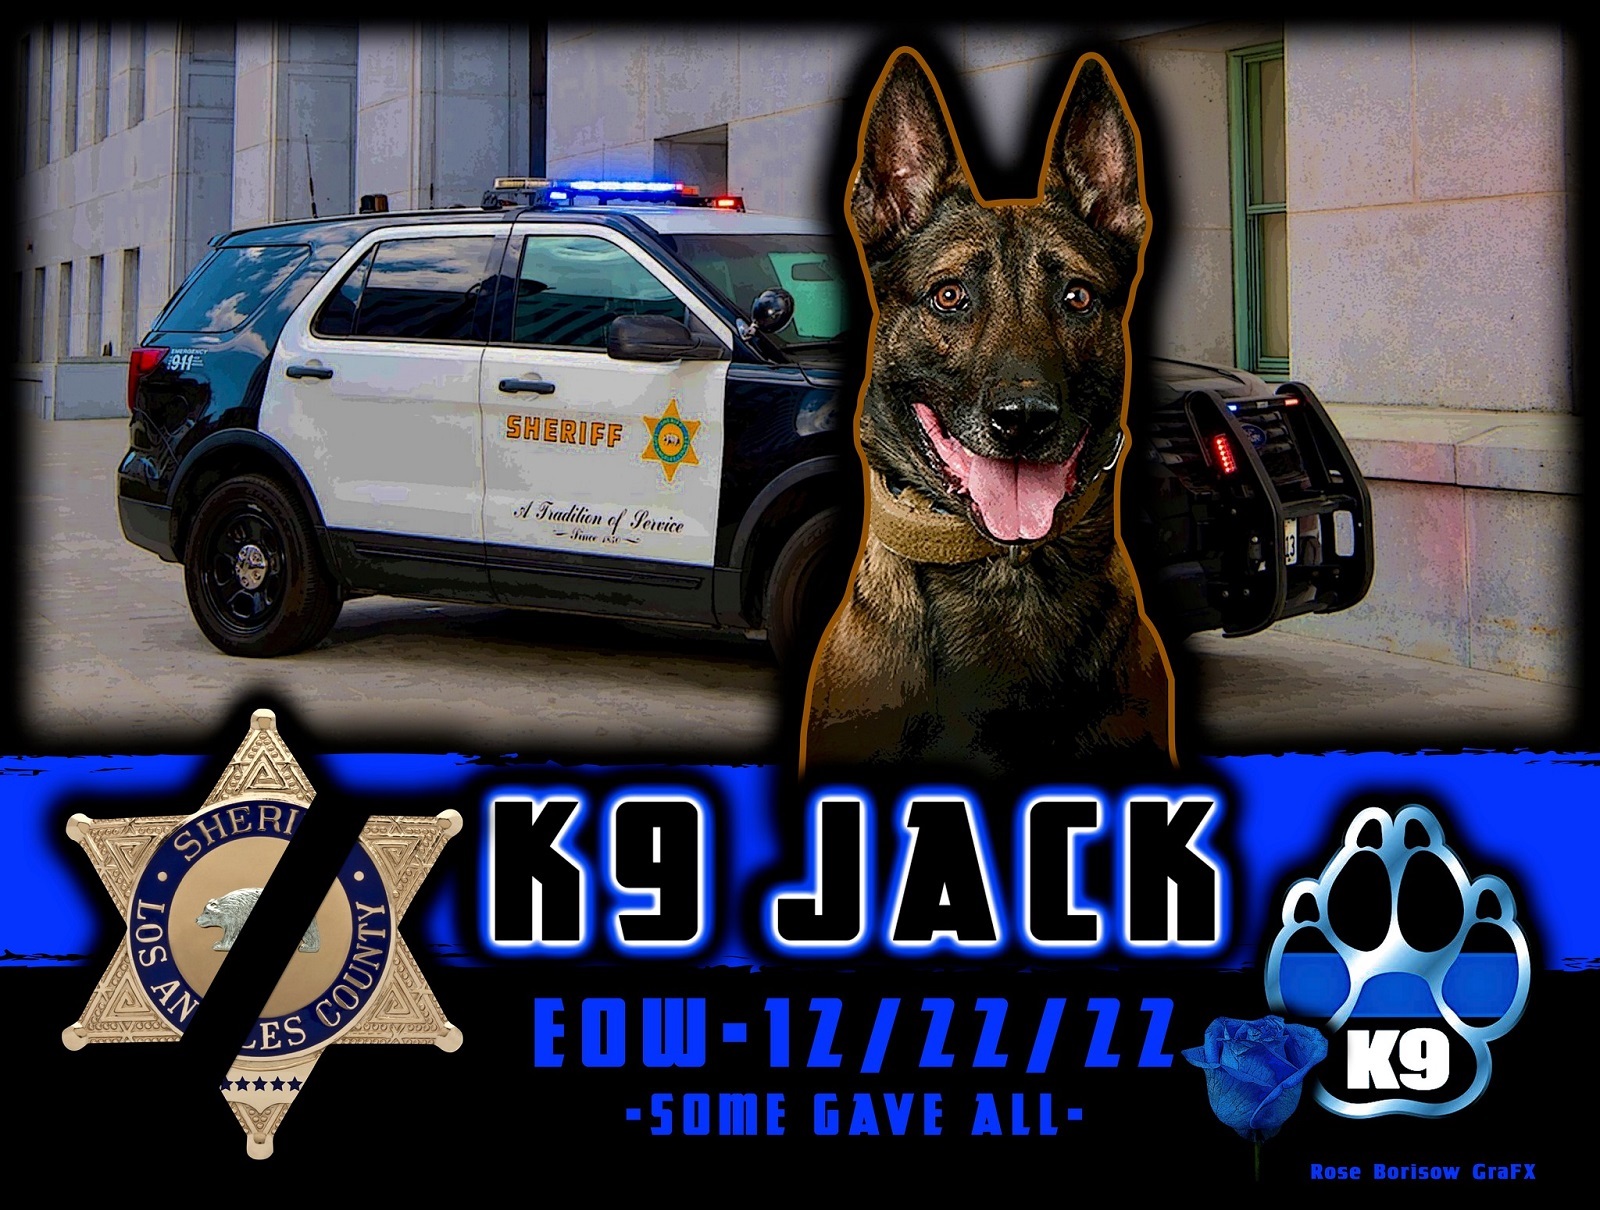 Special Enforcement Bureau Los Angeles Sheriffs Department (seblasd) K9 Jack was shot and killed on 12-22-22